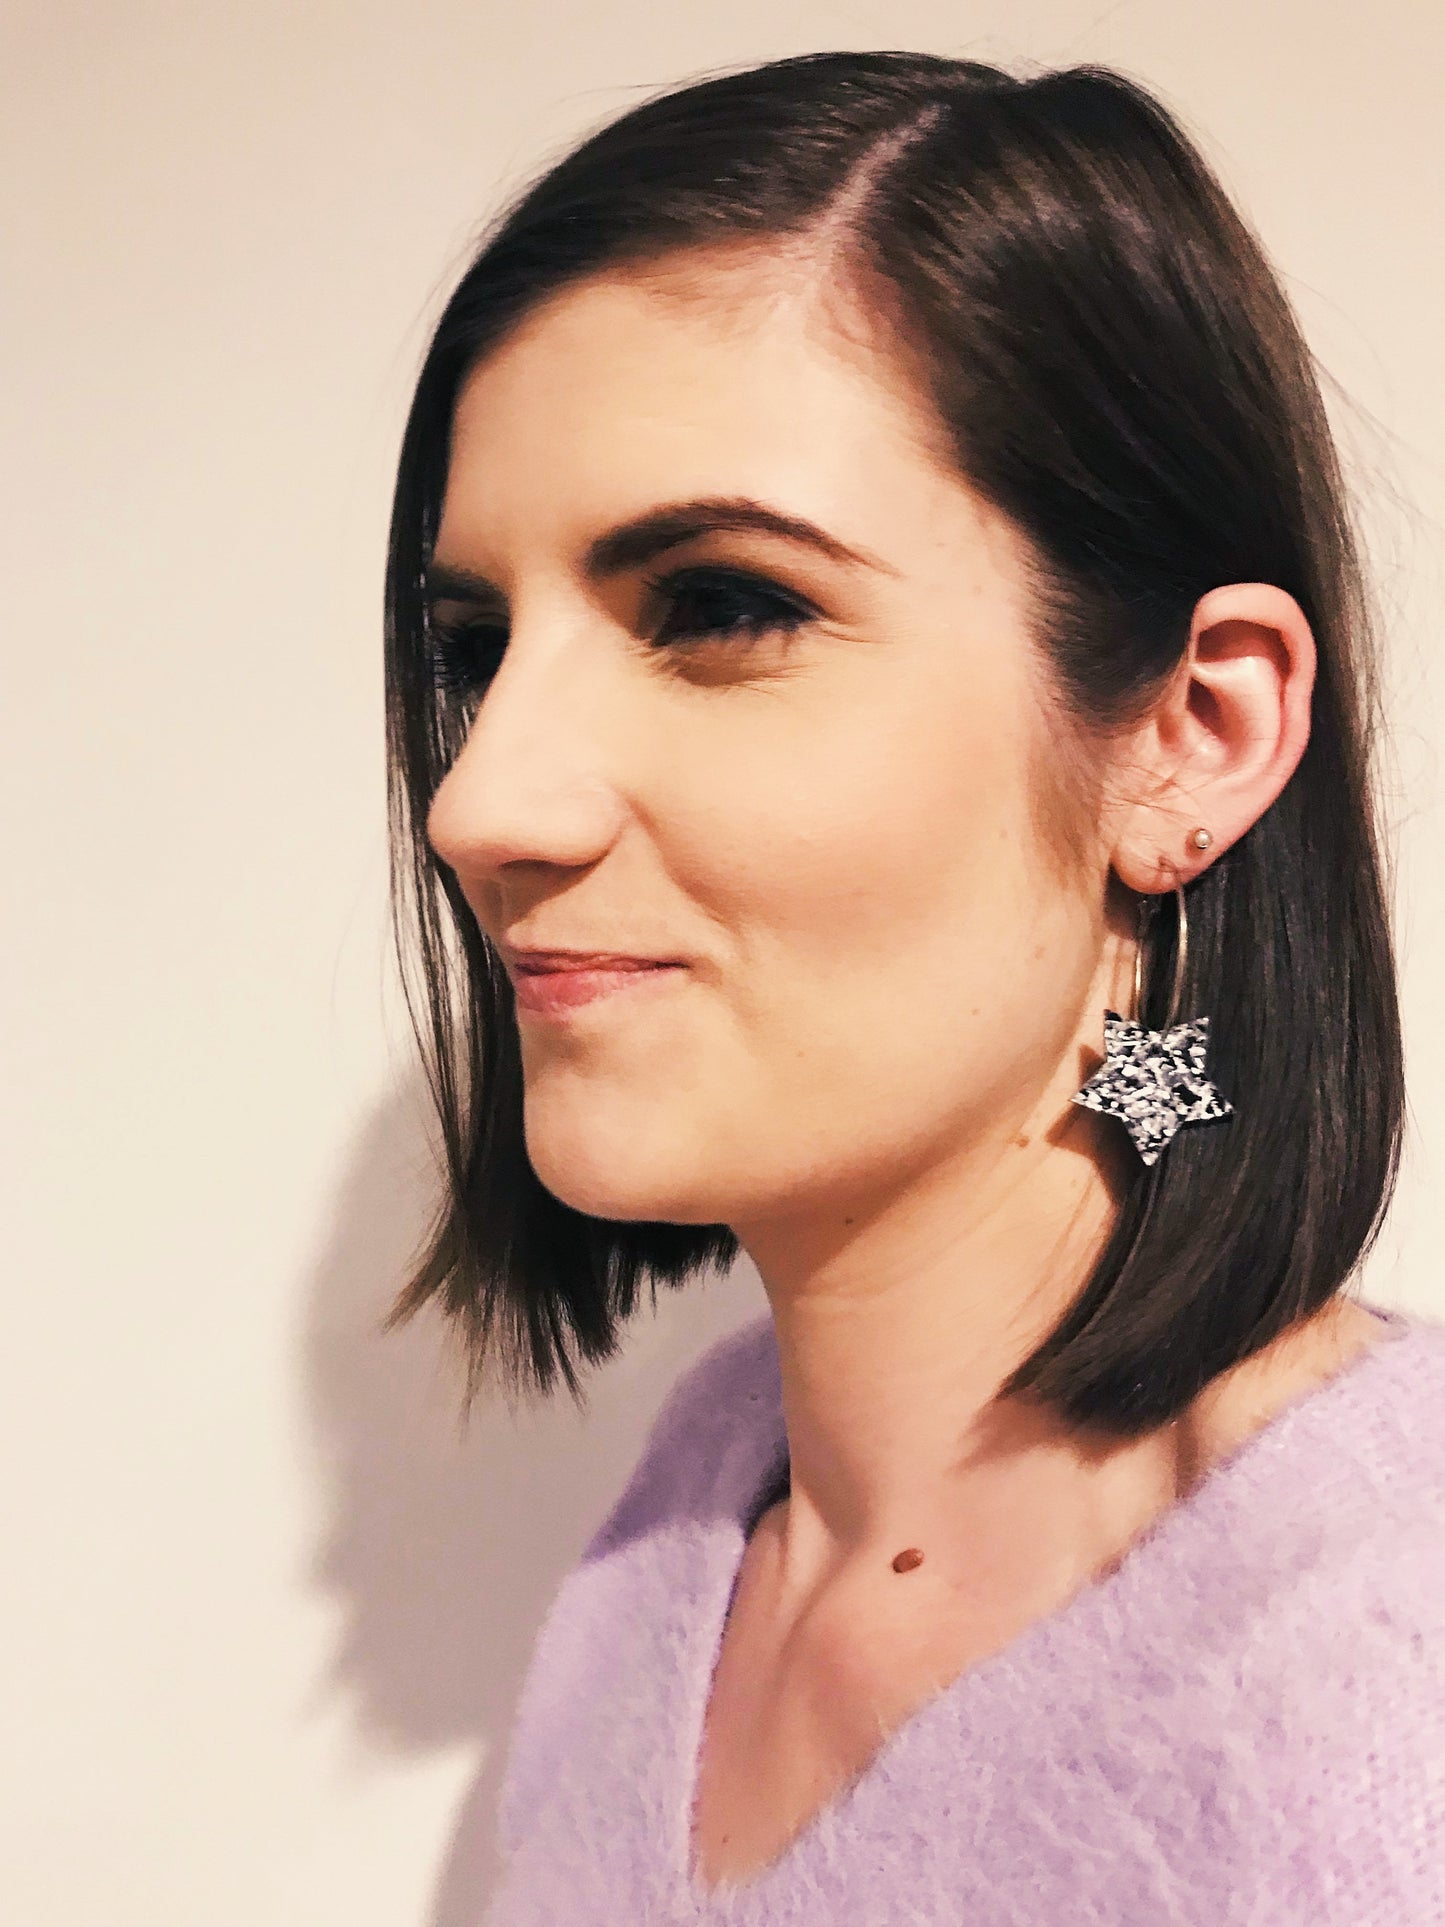 Elsa Earrings